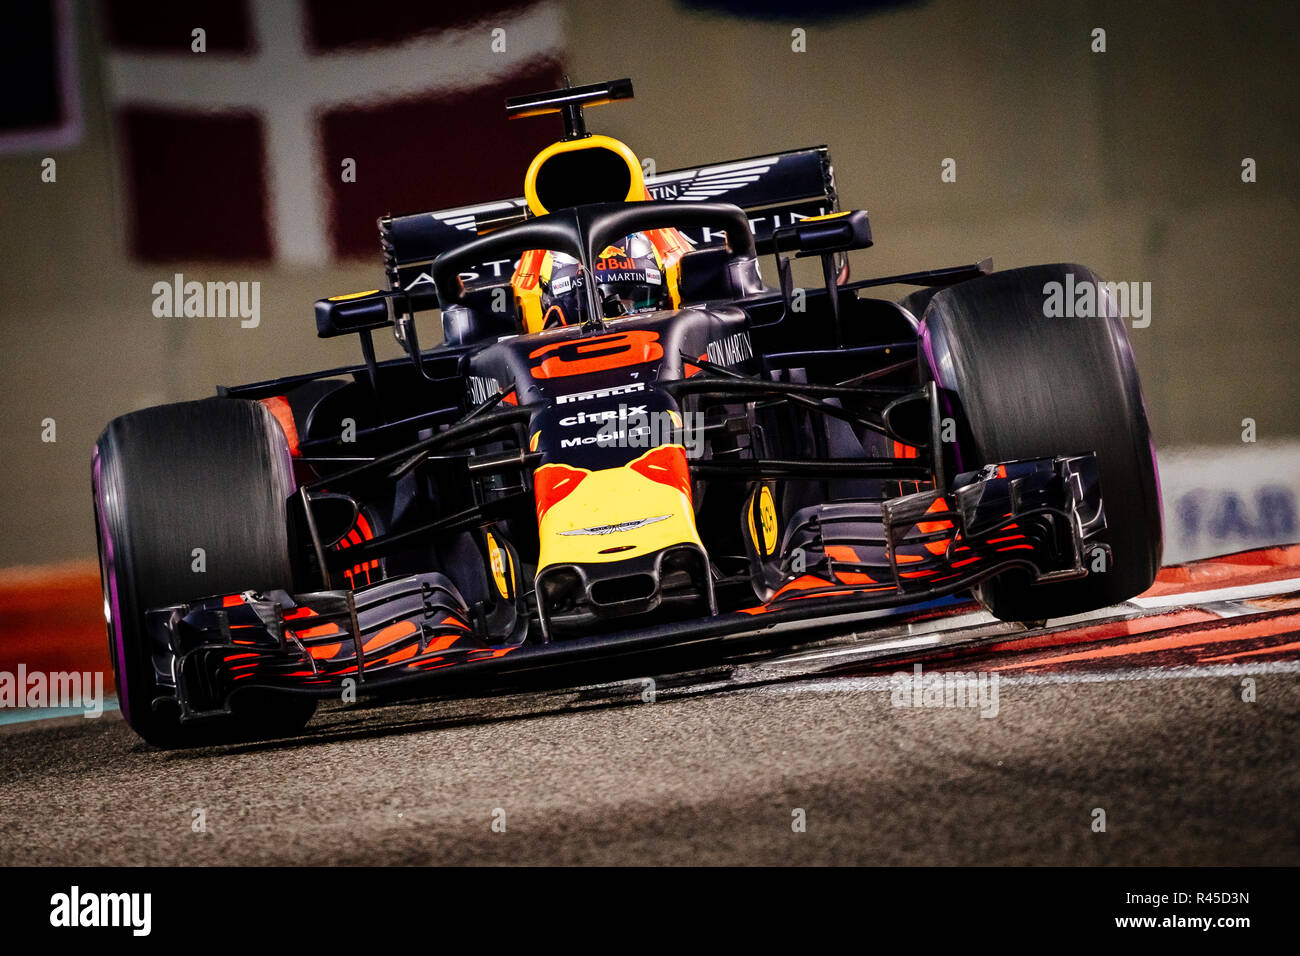 Abu Dhabi, UAE. 25th Nov, 2018. Red Bull Racing’s Australian driver Daniel Ricciardo competes during the Formula 1 Abu Dhabi Grand Prix race at the Yas Marina Circuit in Abu Dhabi on November 25, 2018. Credit: Jure Makovec/Alamy Live News Stock Photo